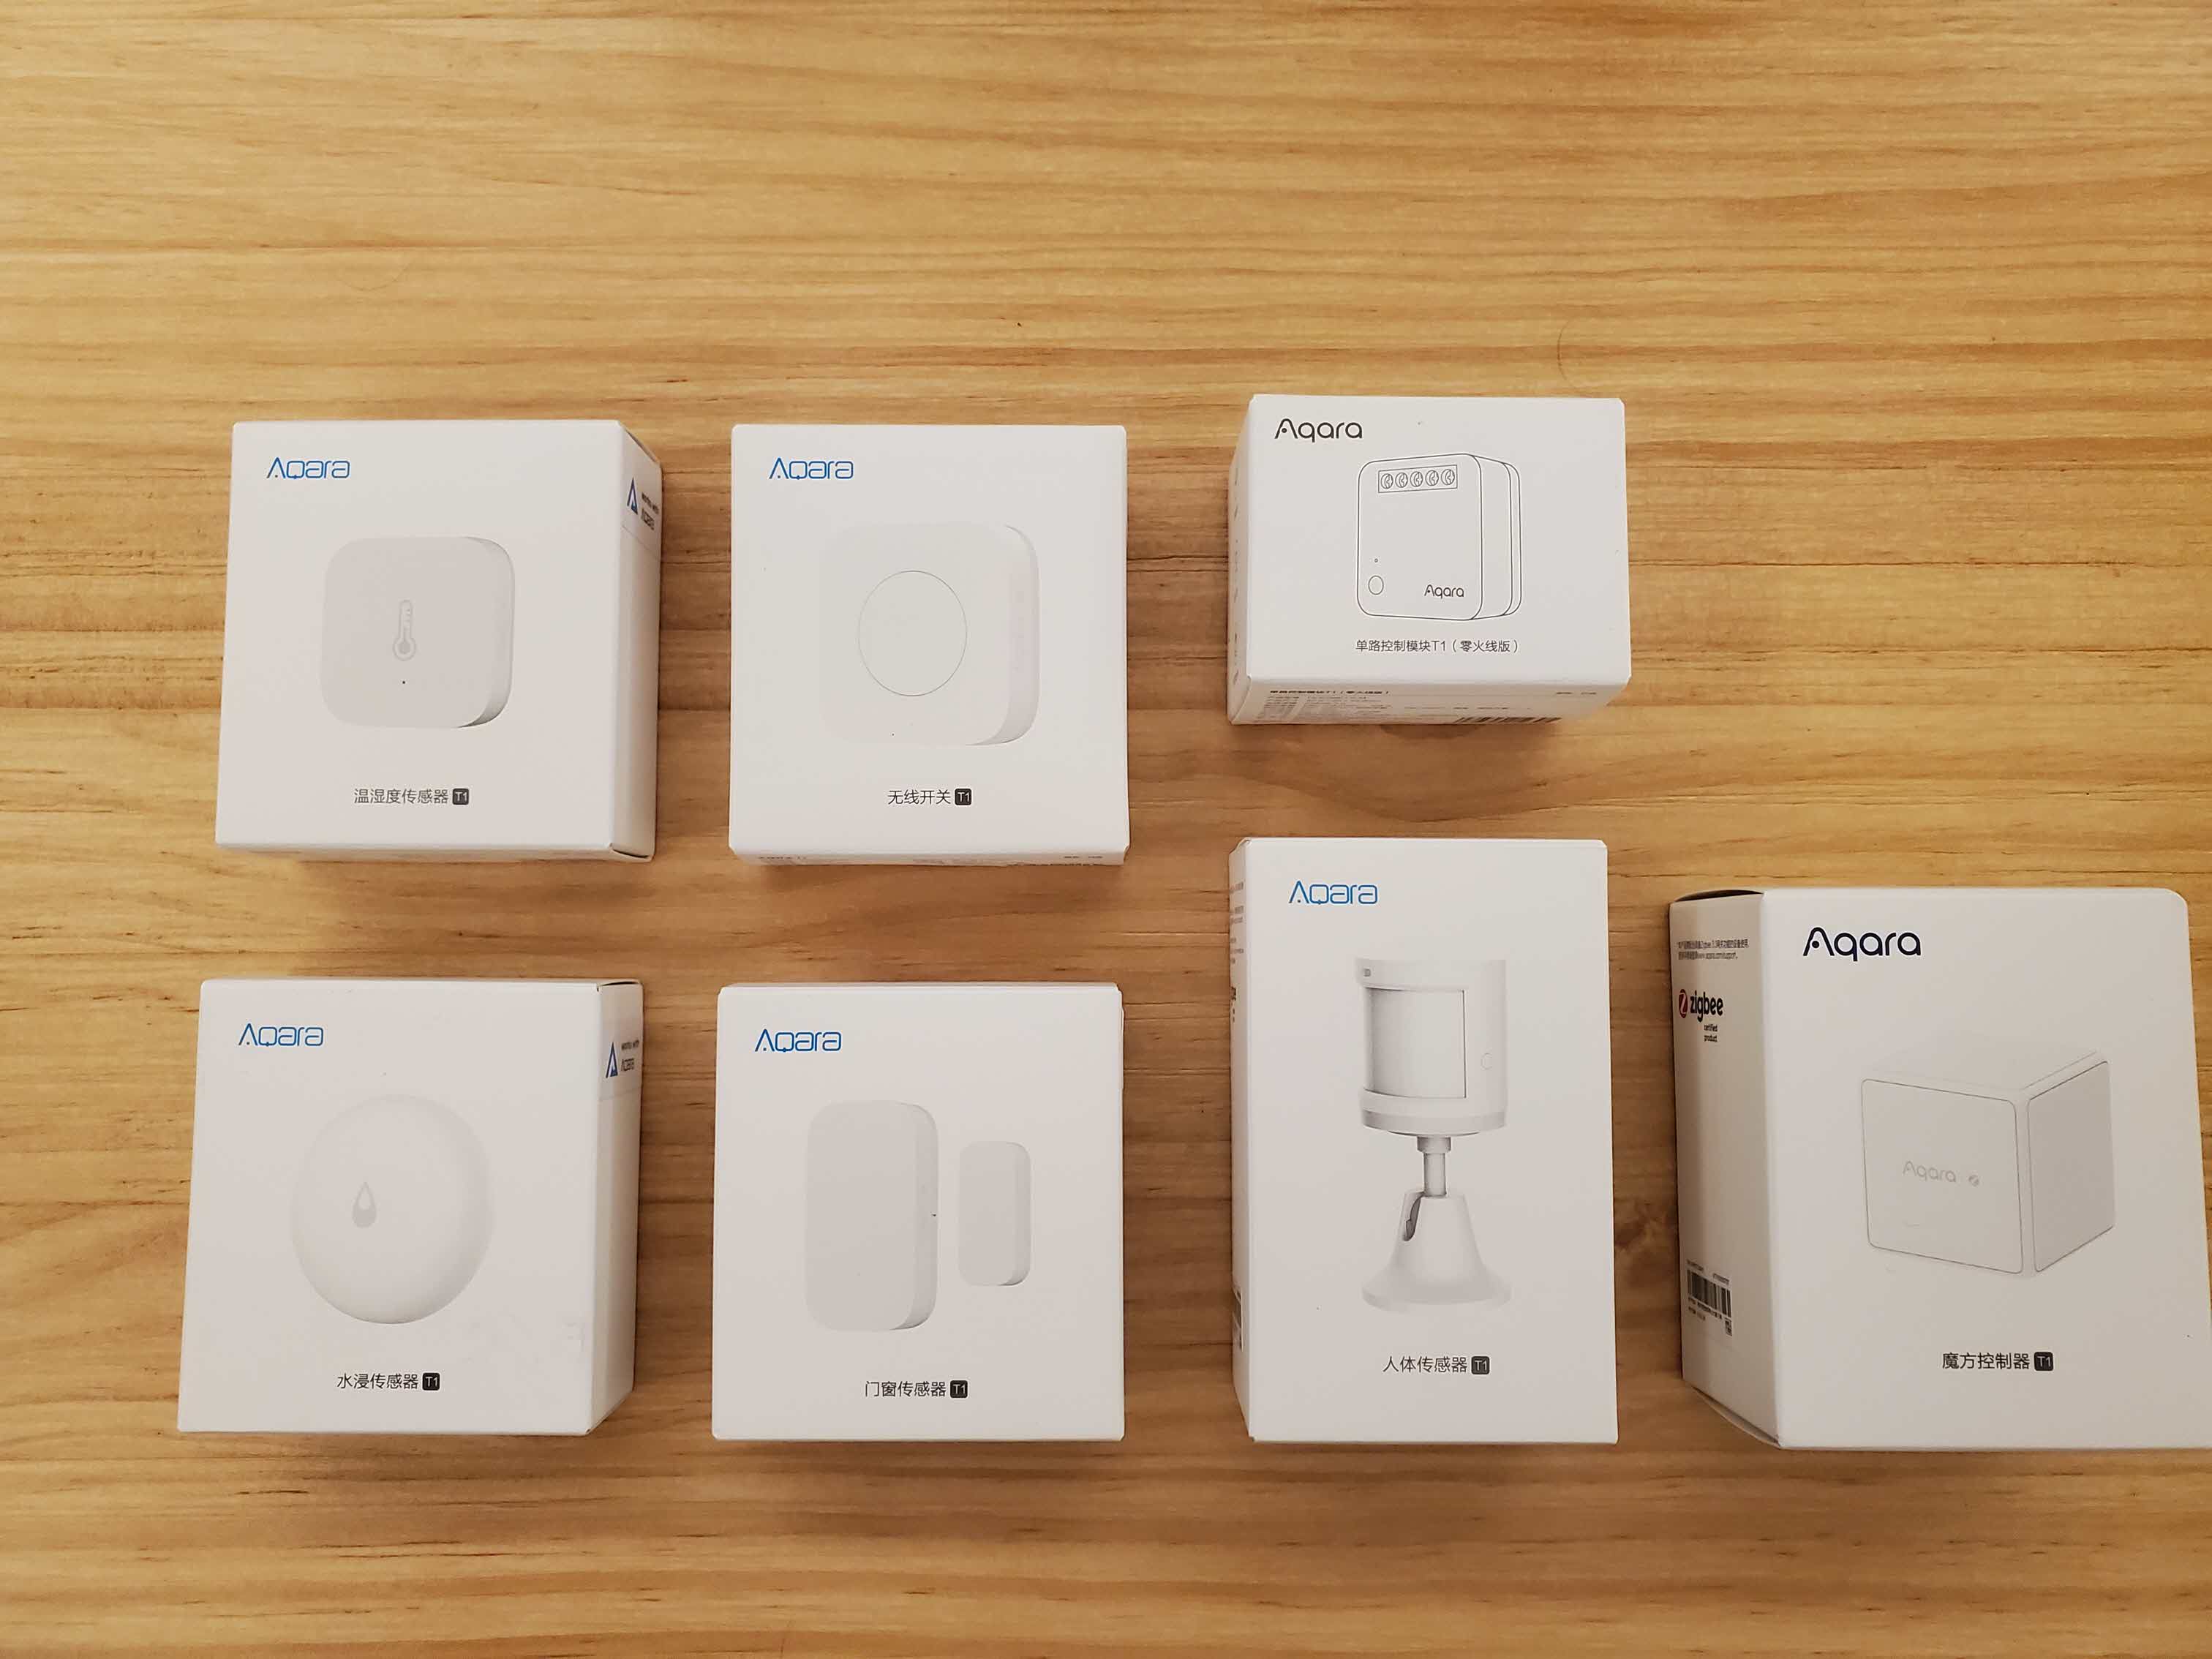 Aqara - Aqara smart home devices are supporting ZigBee 3.0